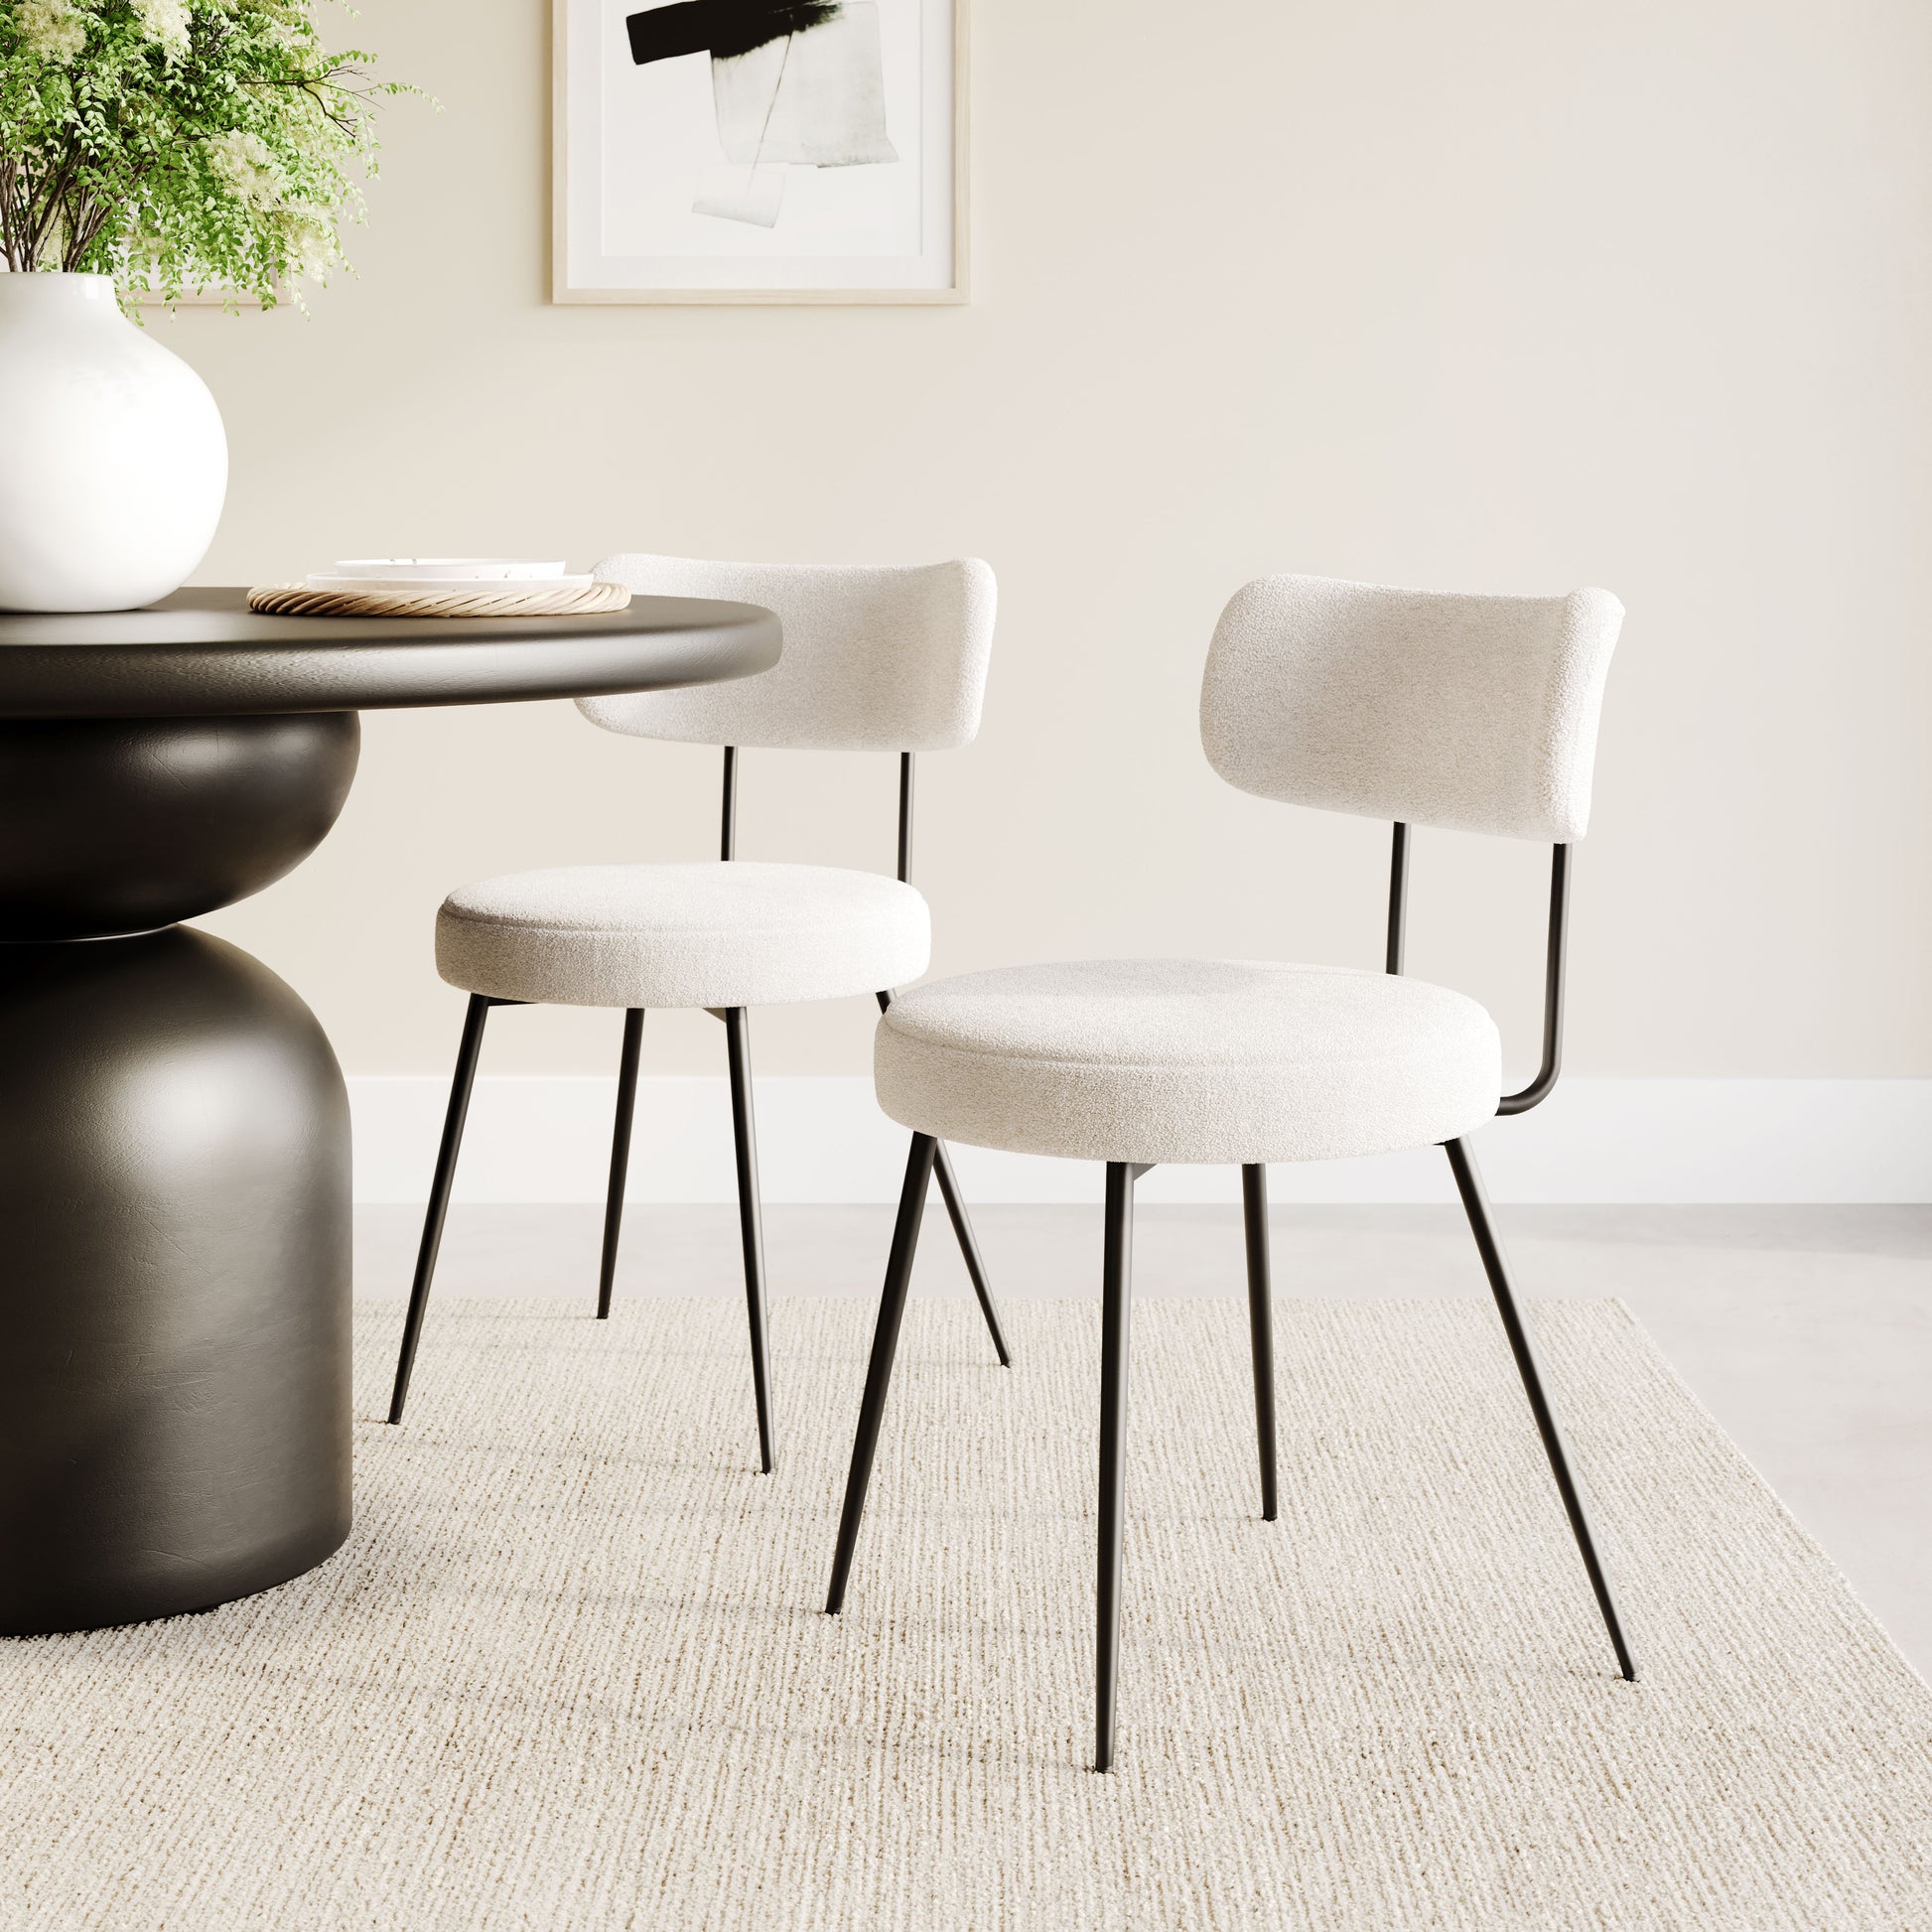 Blanca Dining Chair Ivory - Set of 2 - Elite Maison